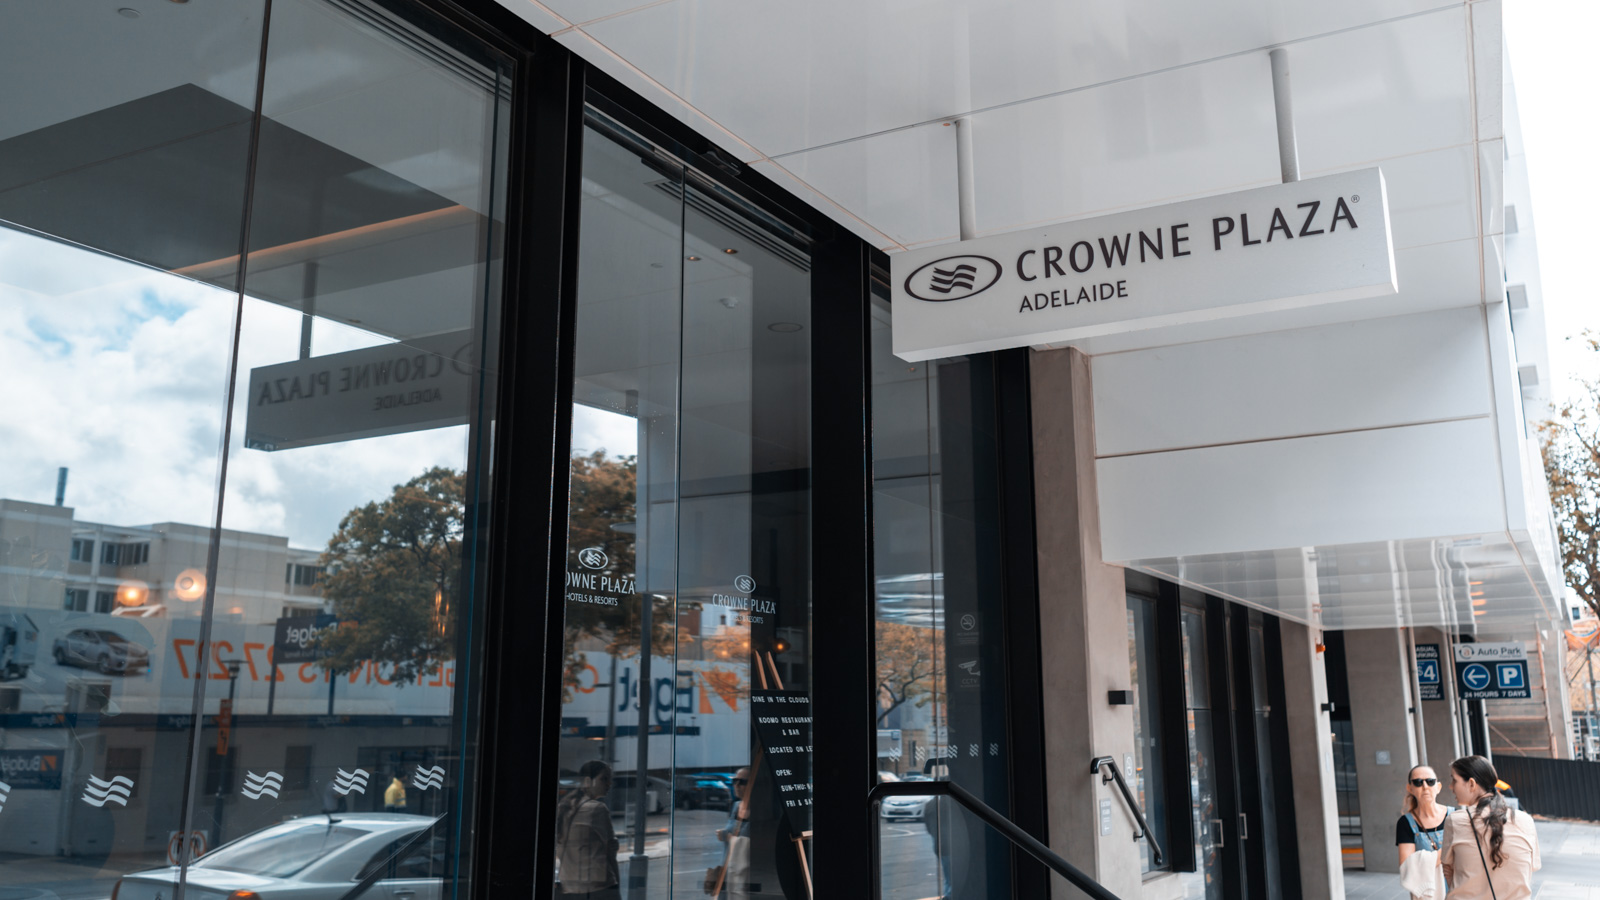 Crowne Plaza Adelaide entrance